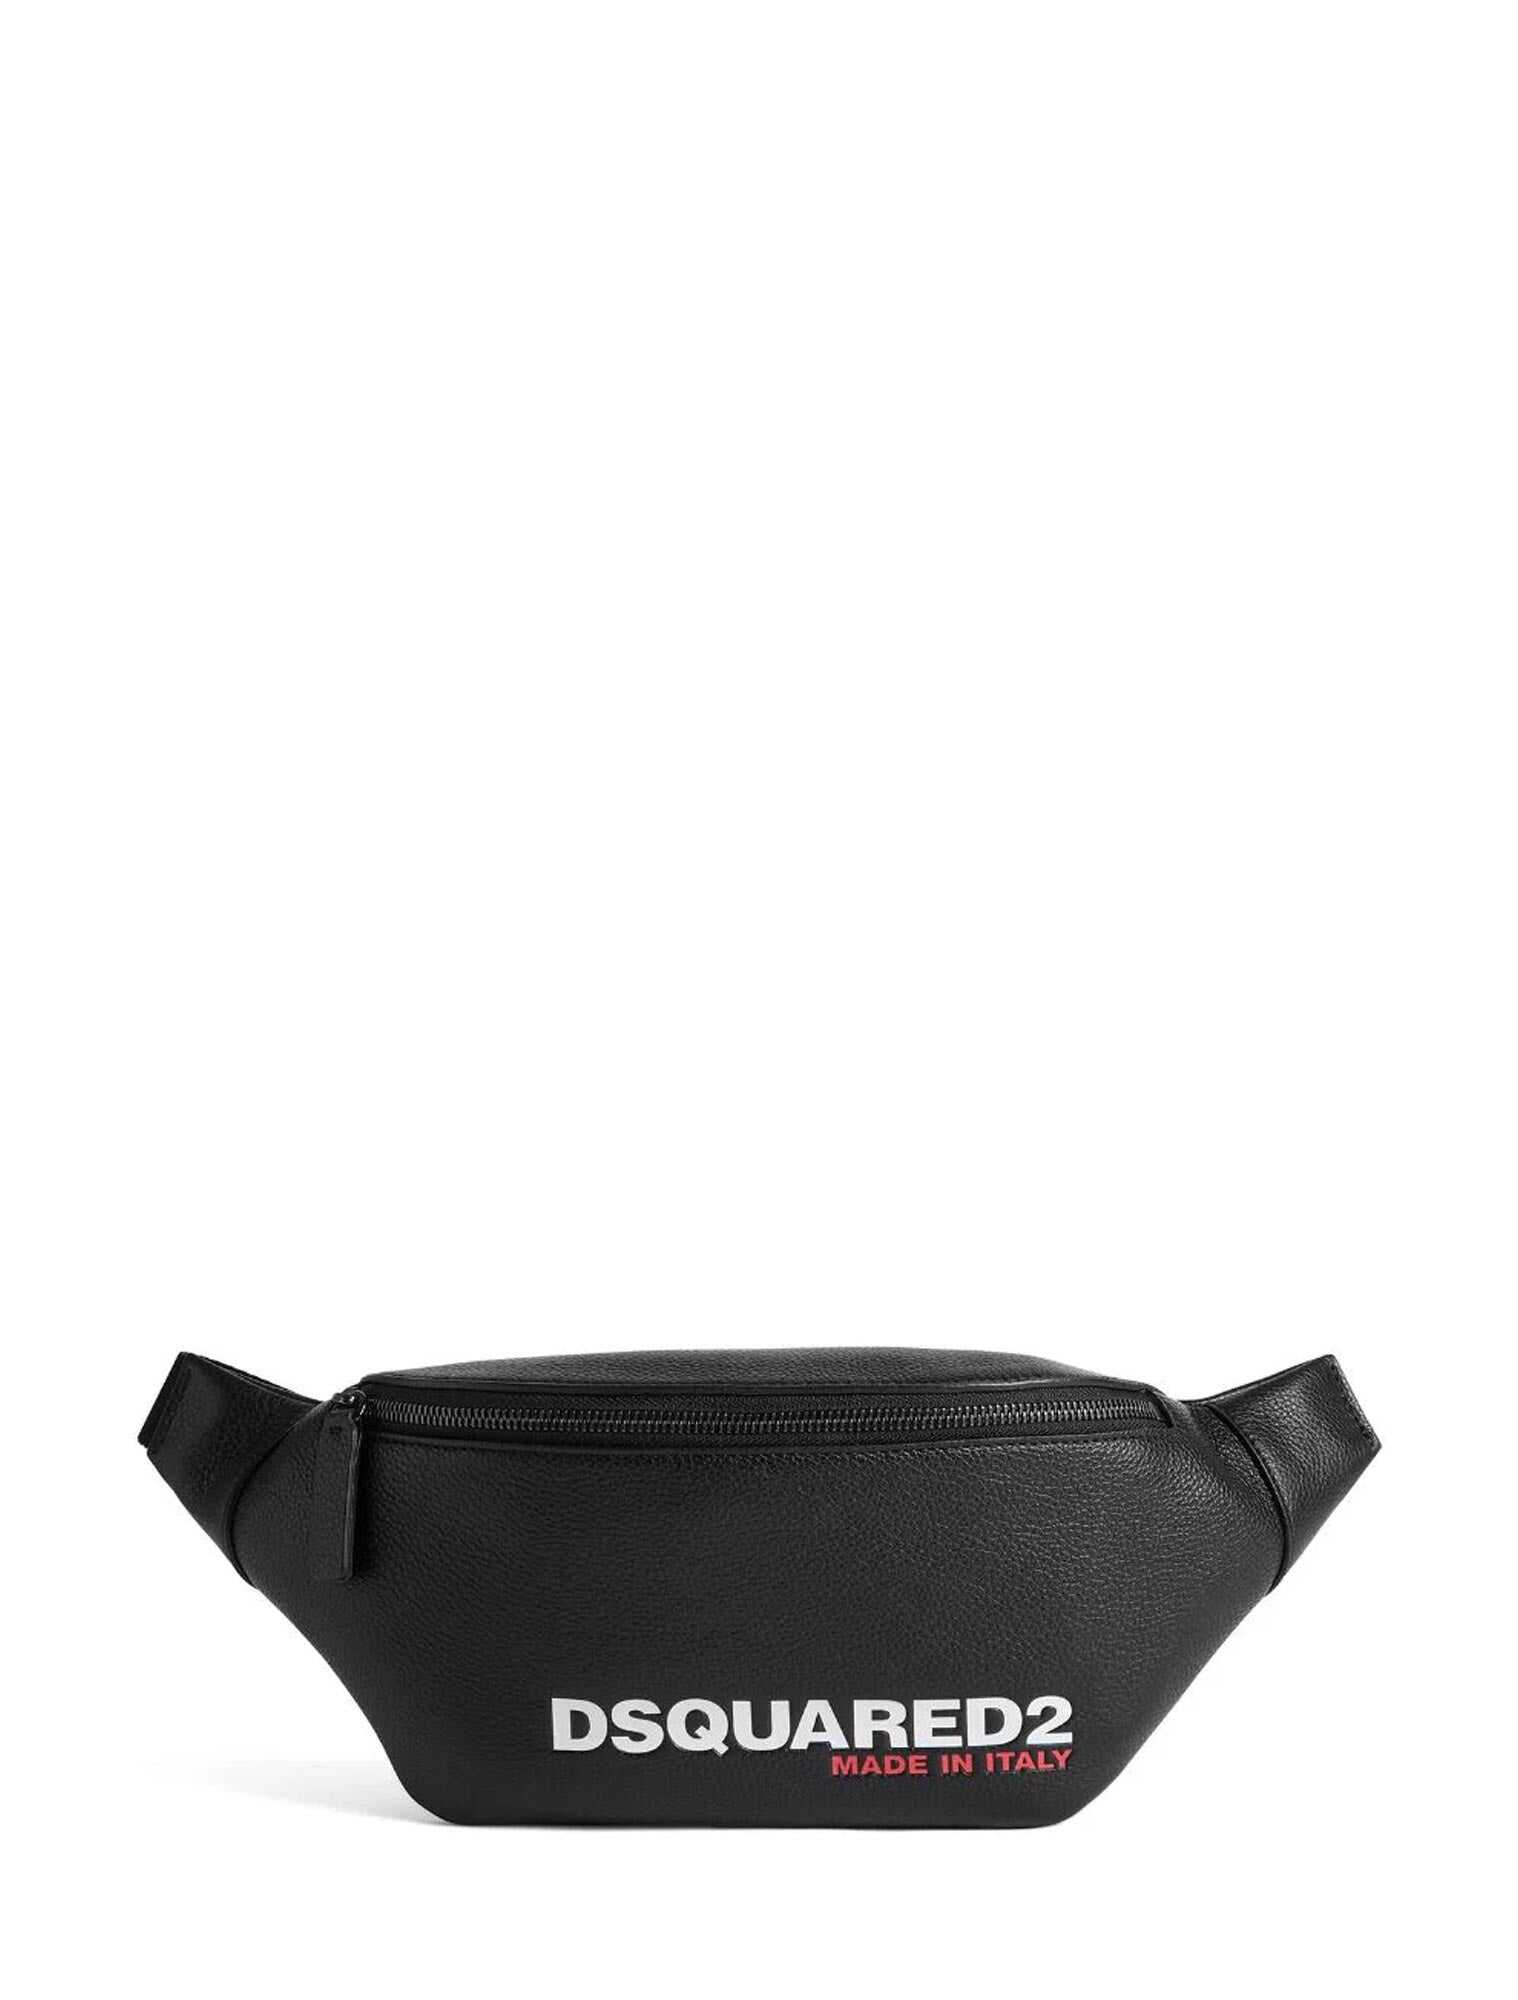 DSQUARED2 Dsquared2 Bags.. BLACK